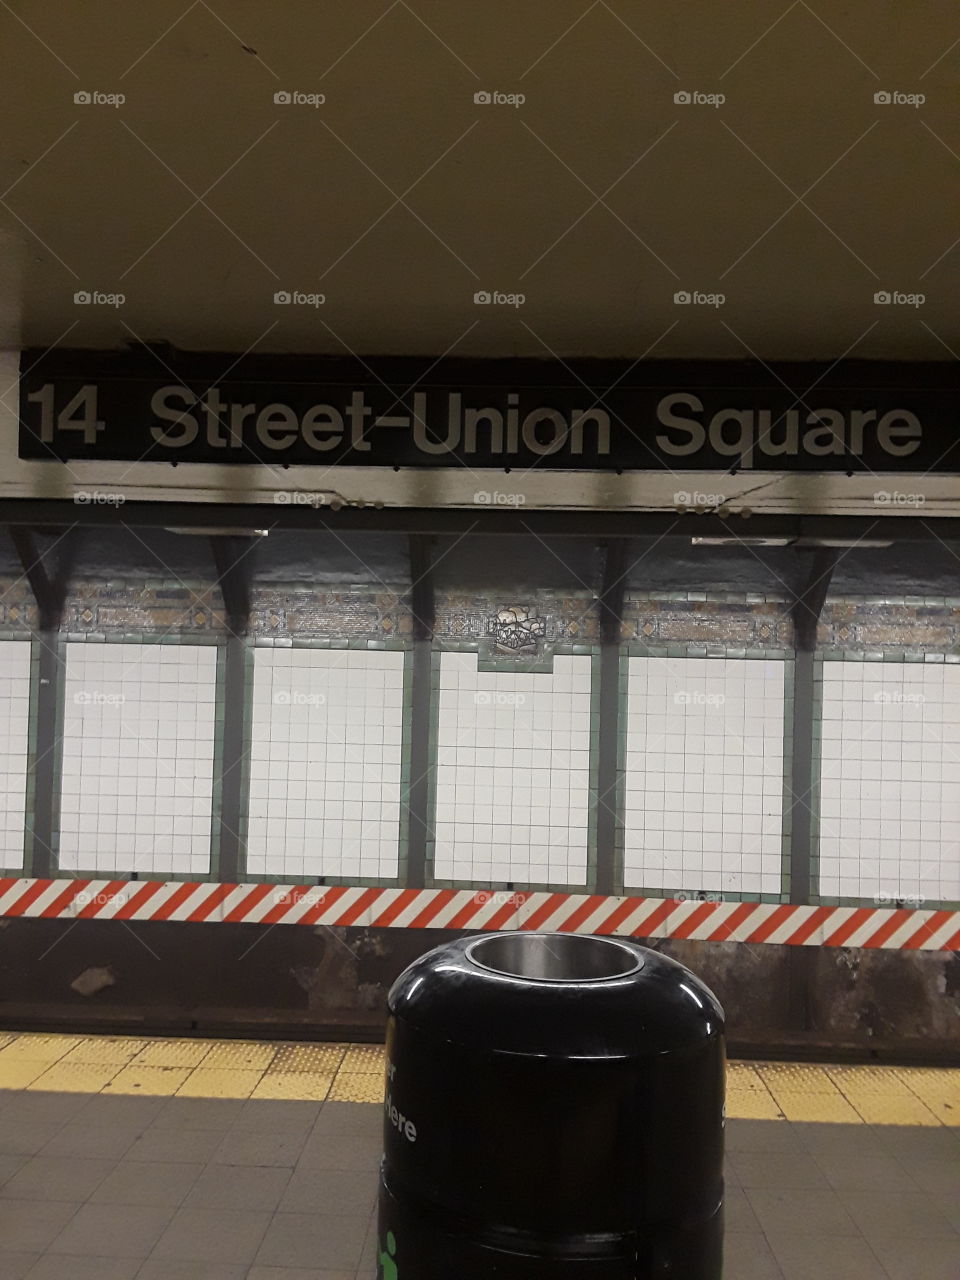 14th Street subway platform sign, Lower Manhattan, New York